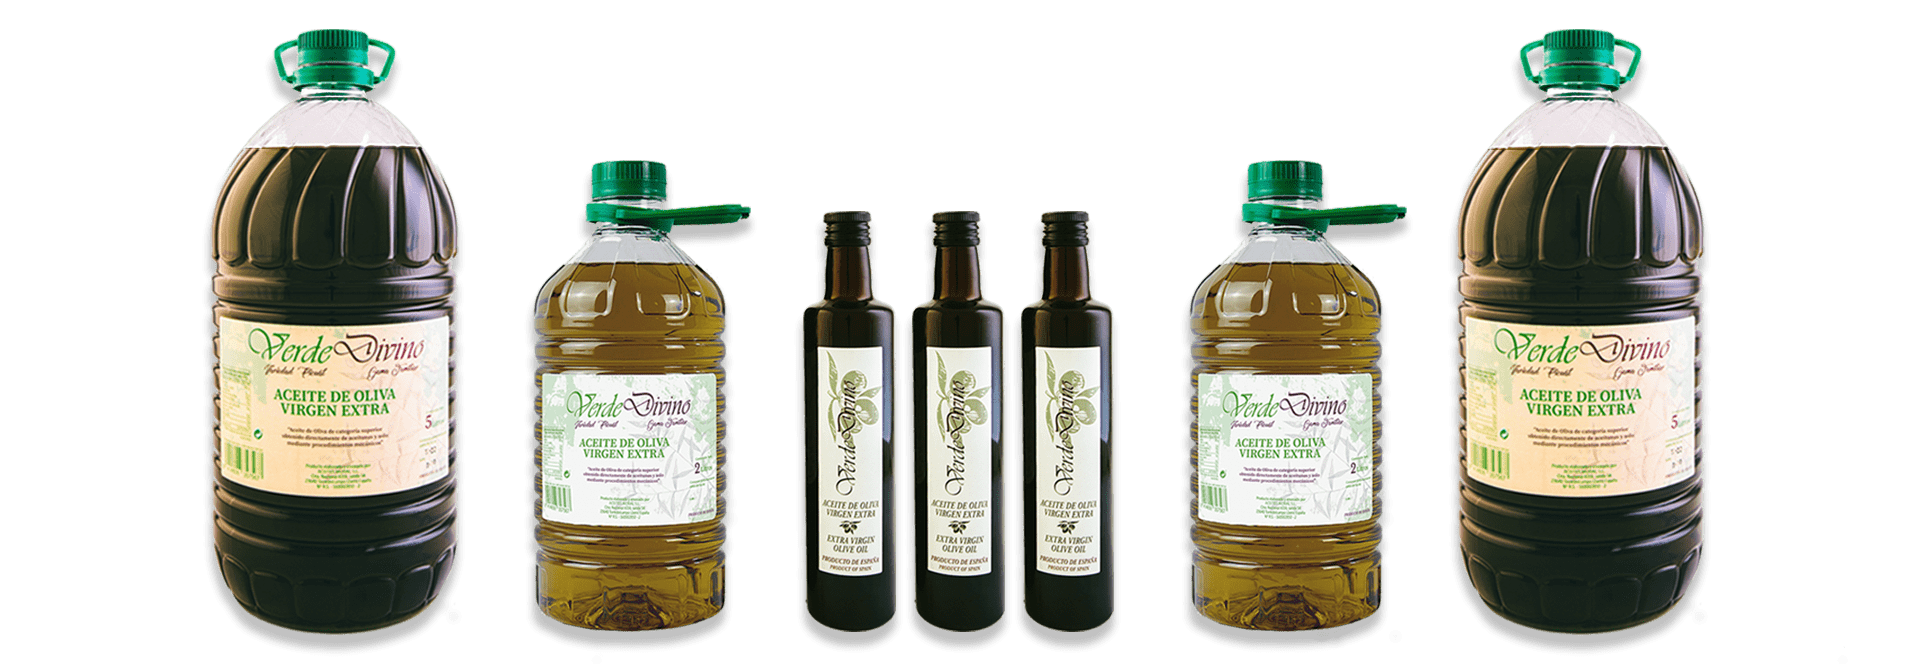 Verde Divino特级初榨橄榄油瓶系列